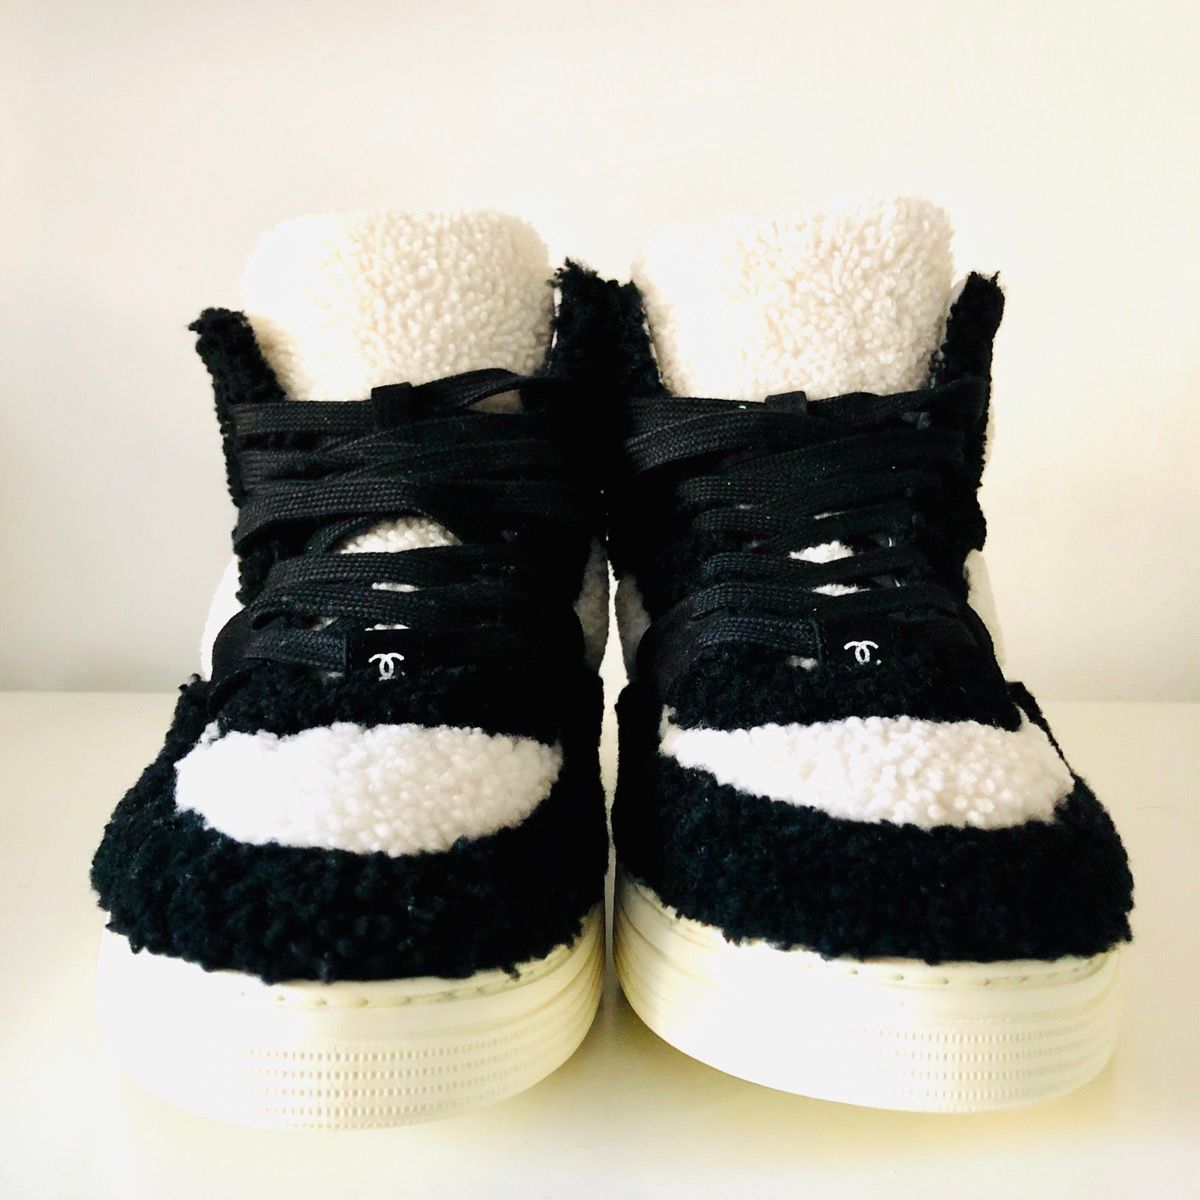 Buy Chanel Sneaker 'White Black' - G35365 X53366 C7600